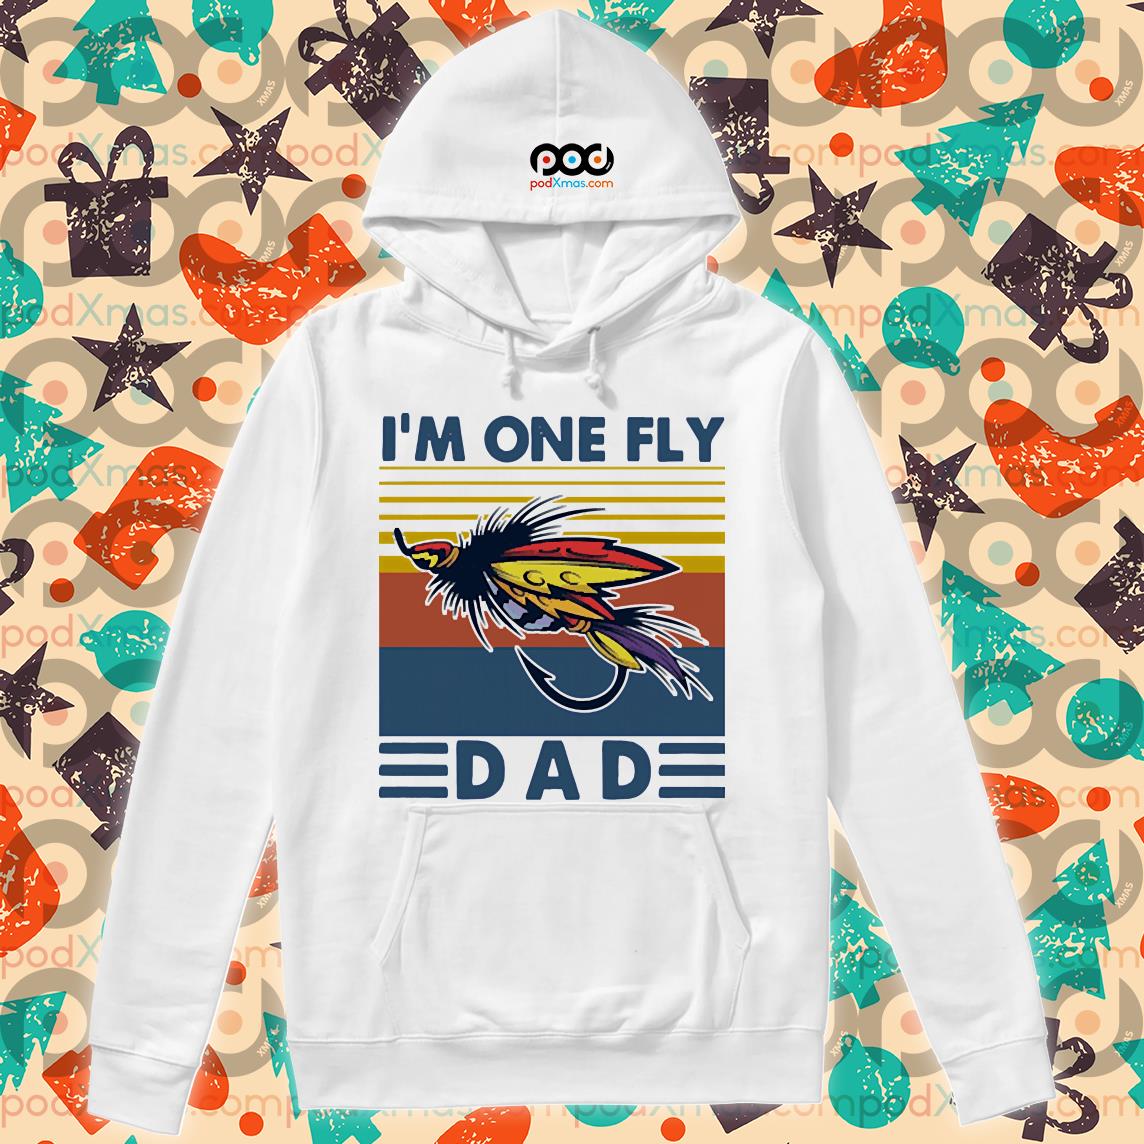 https://images.podxmas.com/wp-content/uploads/2020/05/fishing-im-one-fly-dad-vintage-hoodie.jpg